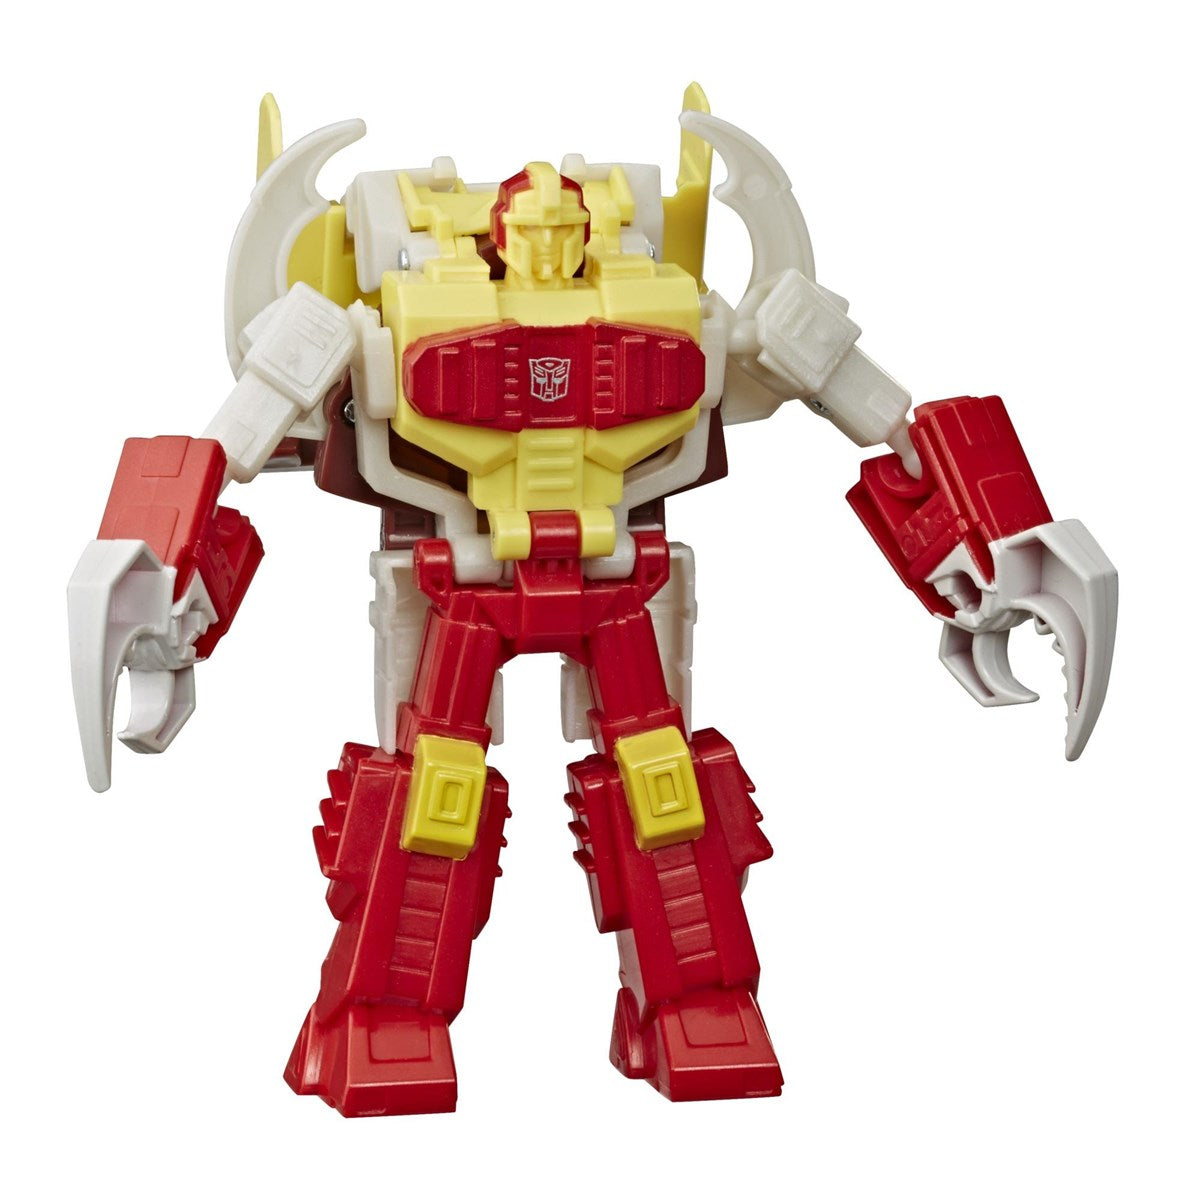 Transformers Cyberverse Tek Adımda Dönüşen Figür - Repugnus E3522-E7073 | Toysall